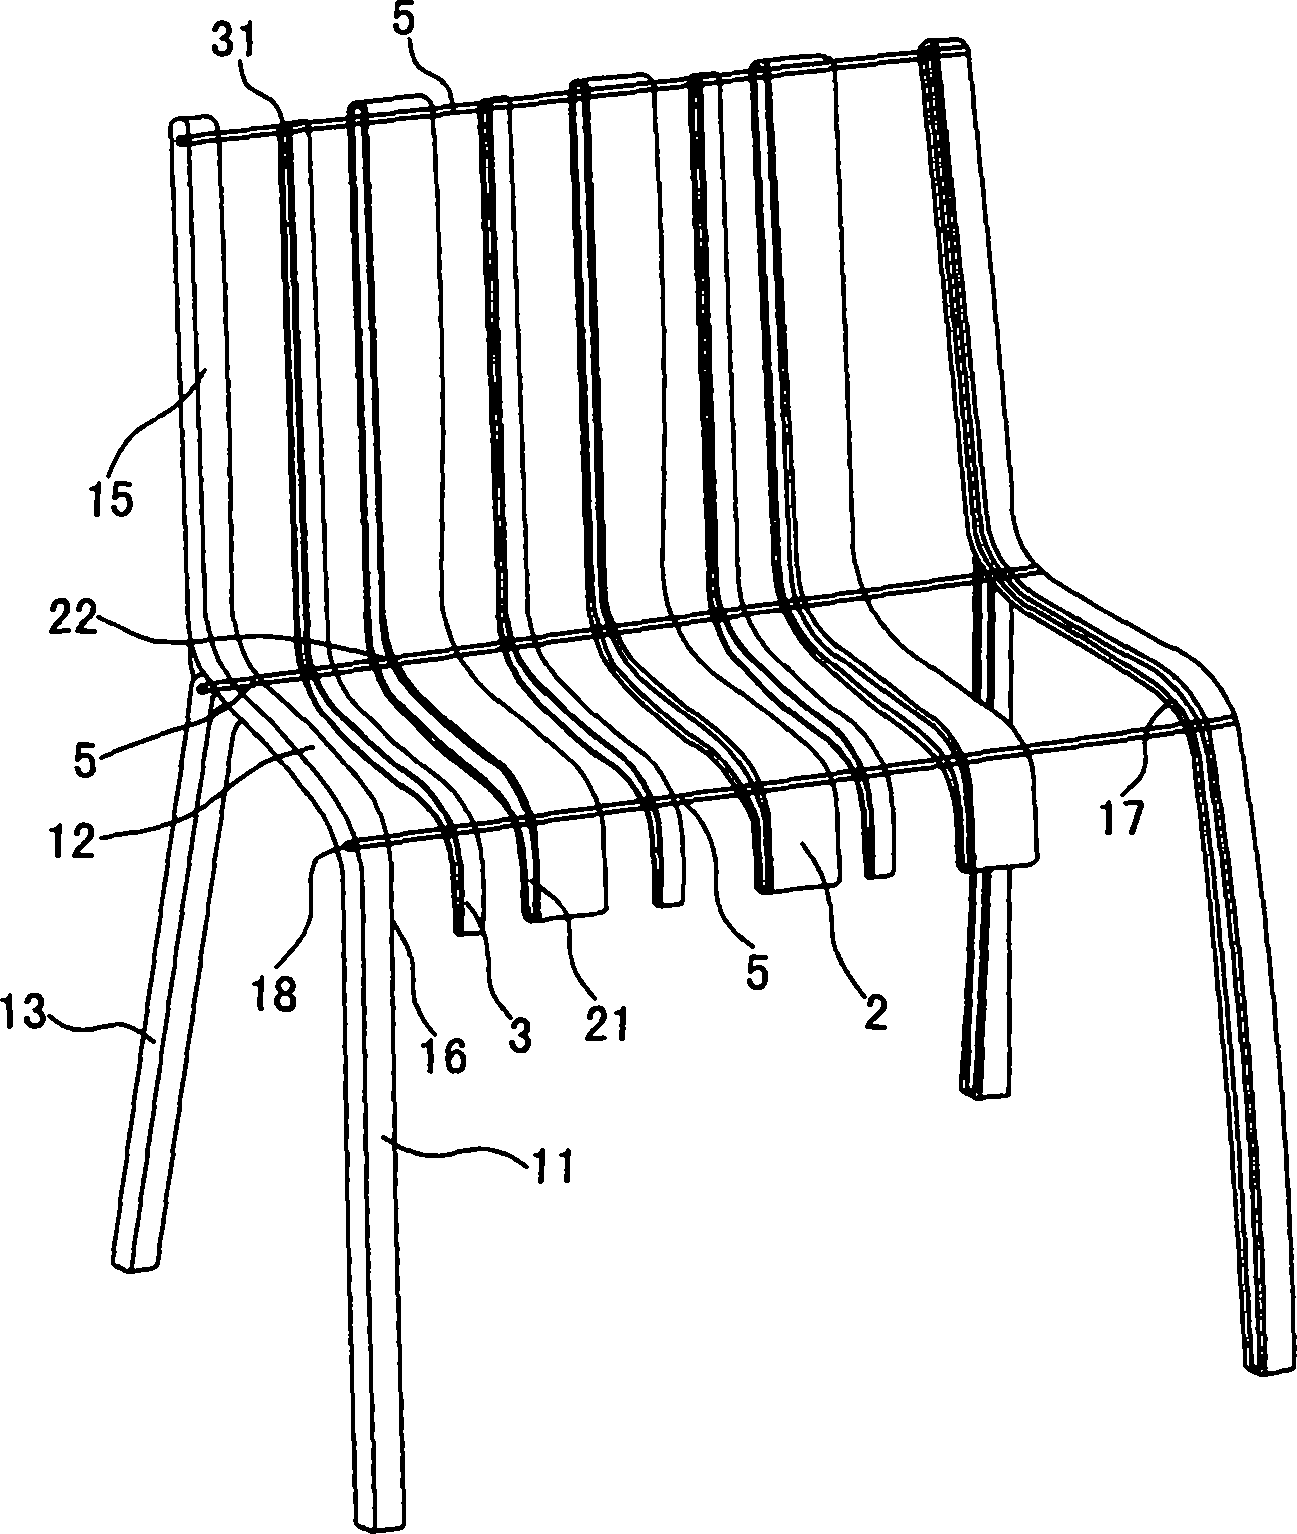 Bar-shaped embedding chair